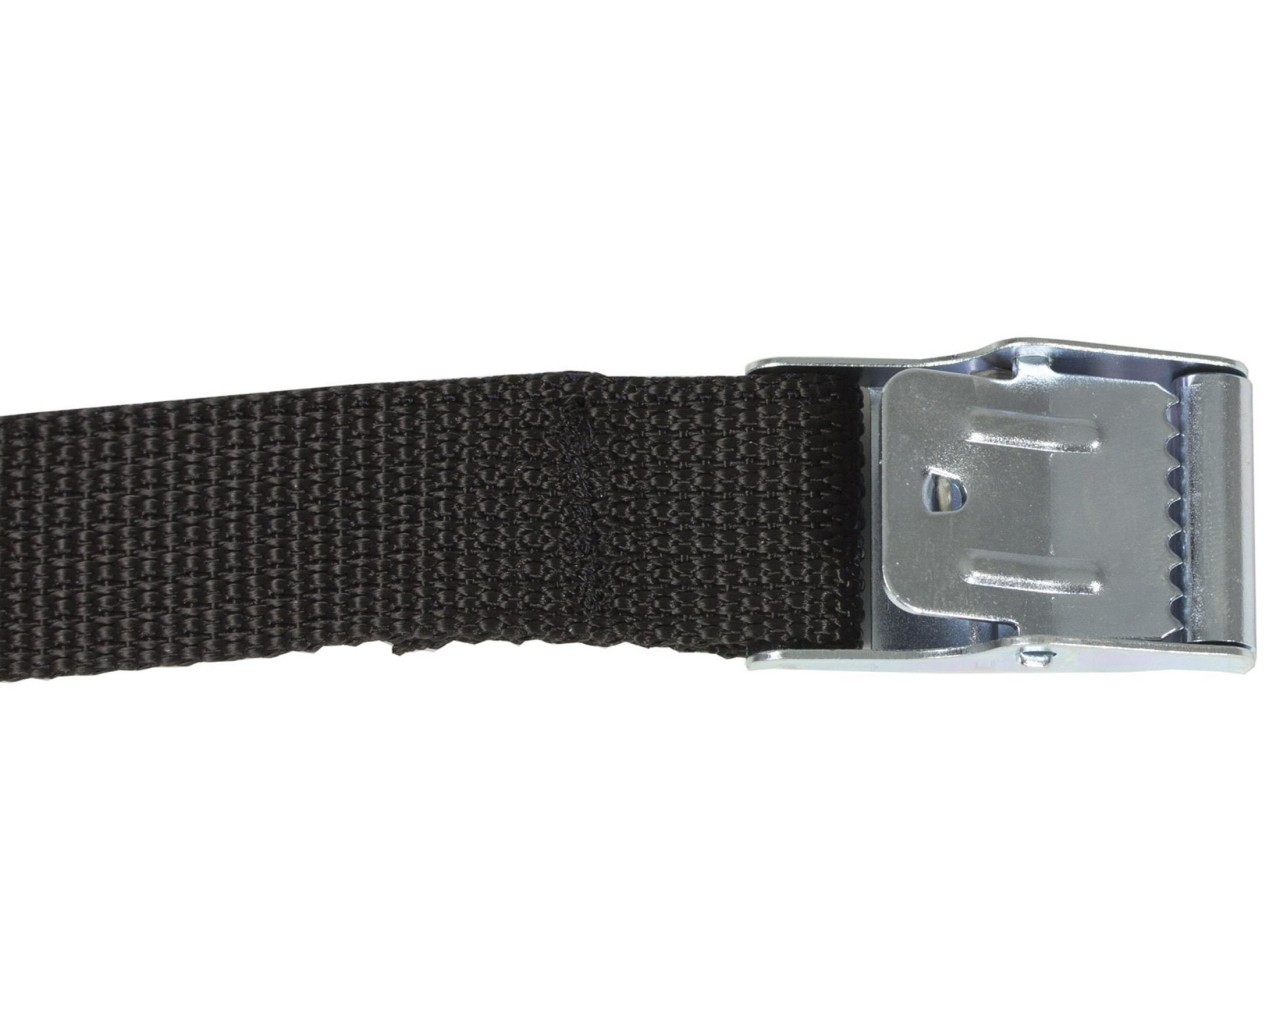 Ortlieb compression straps 20mm/50cm metal buckle